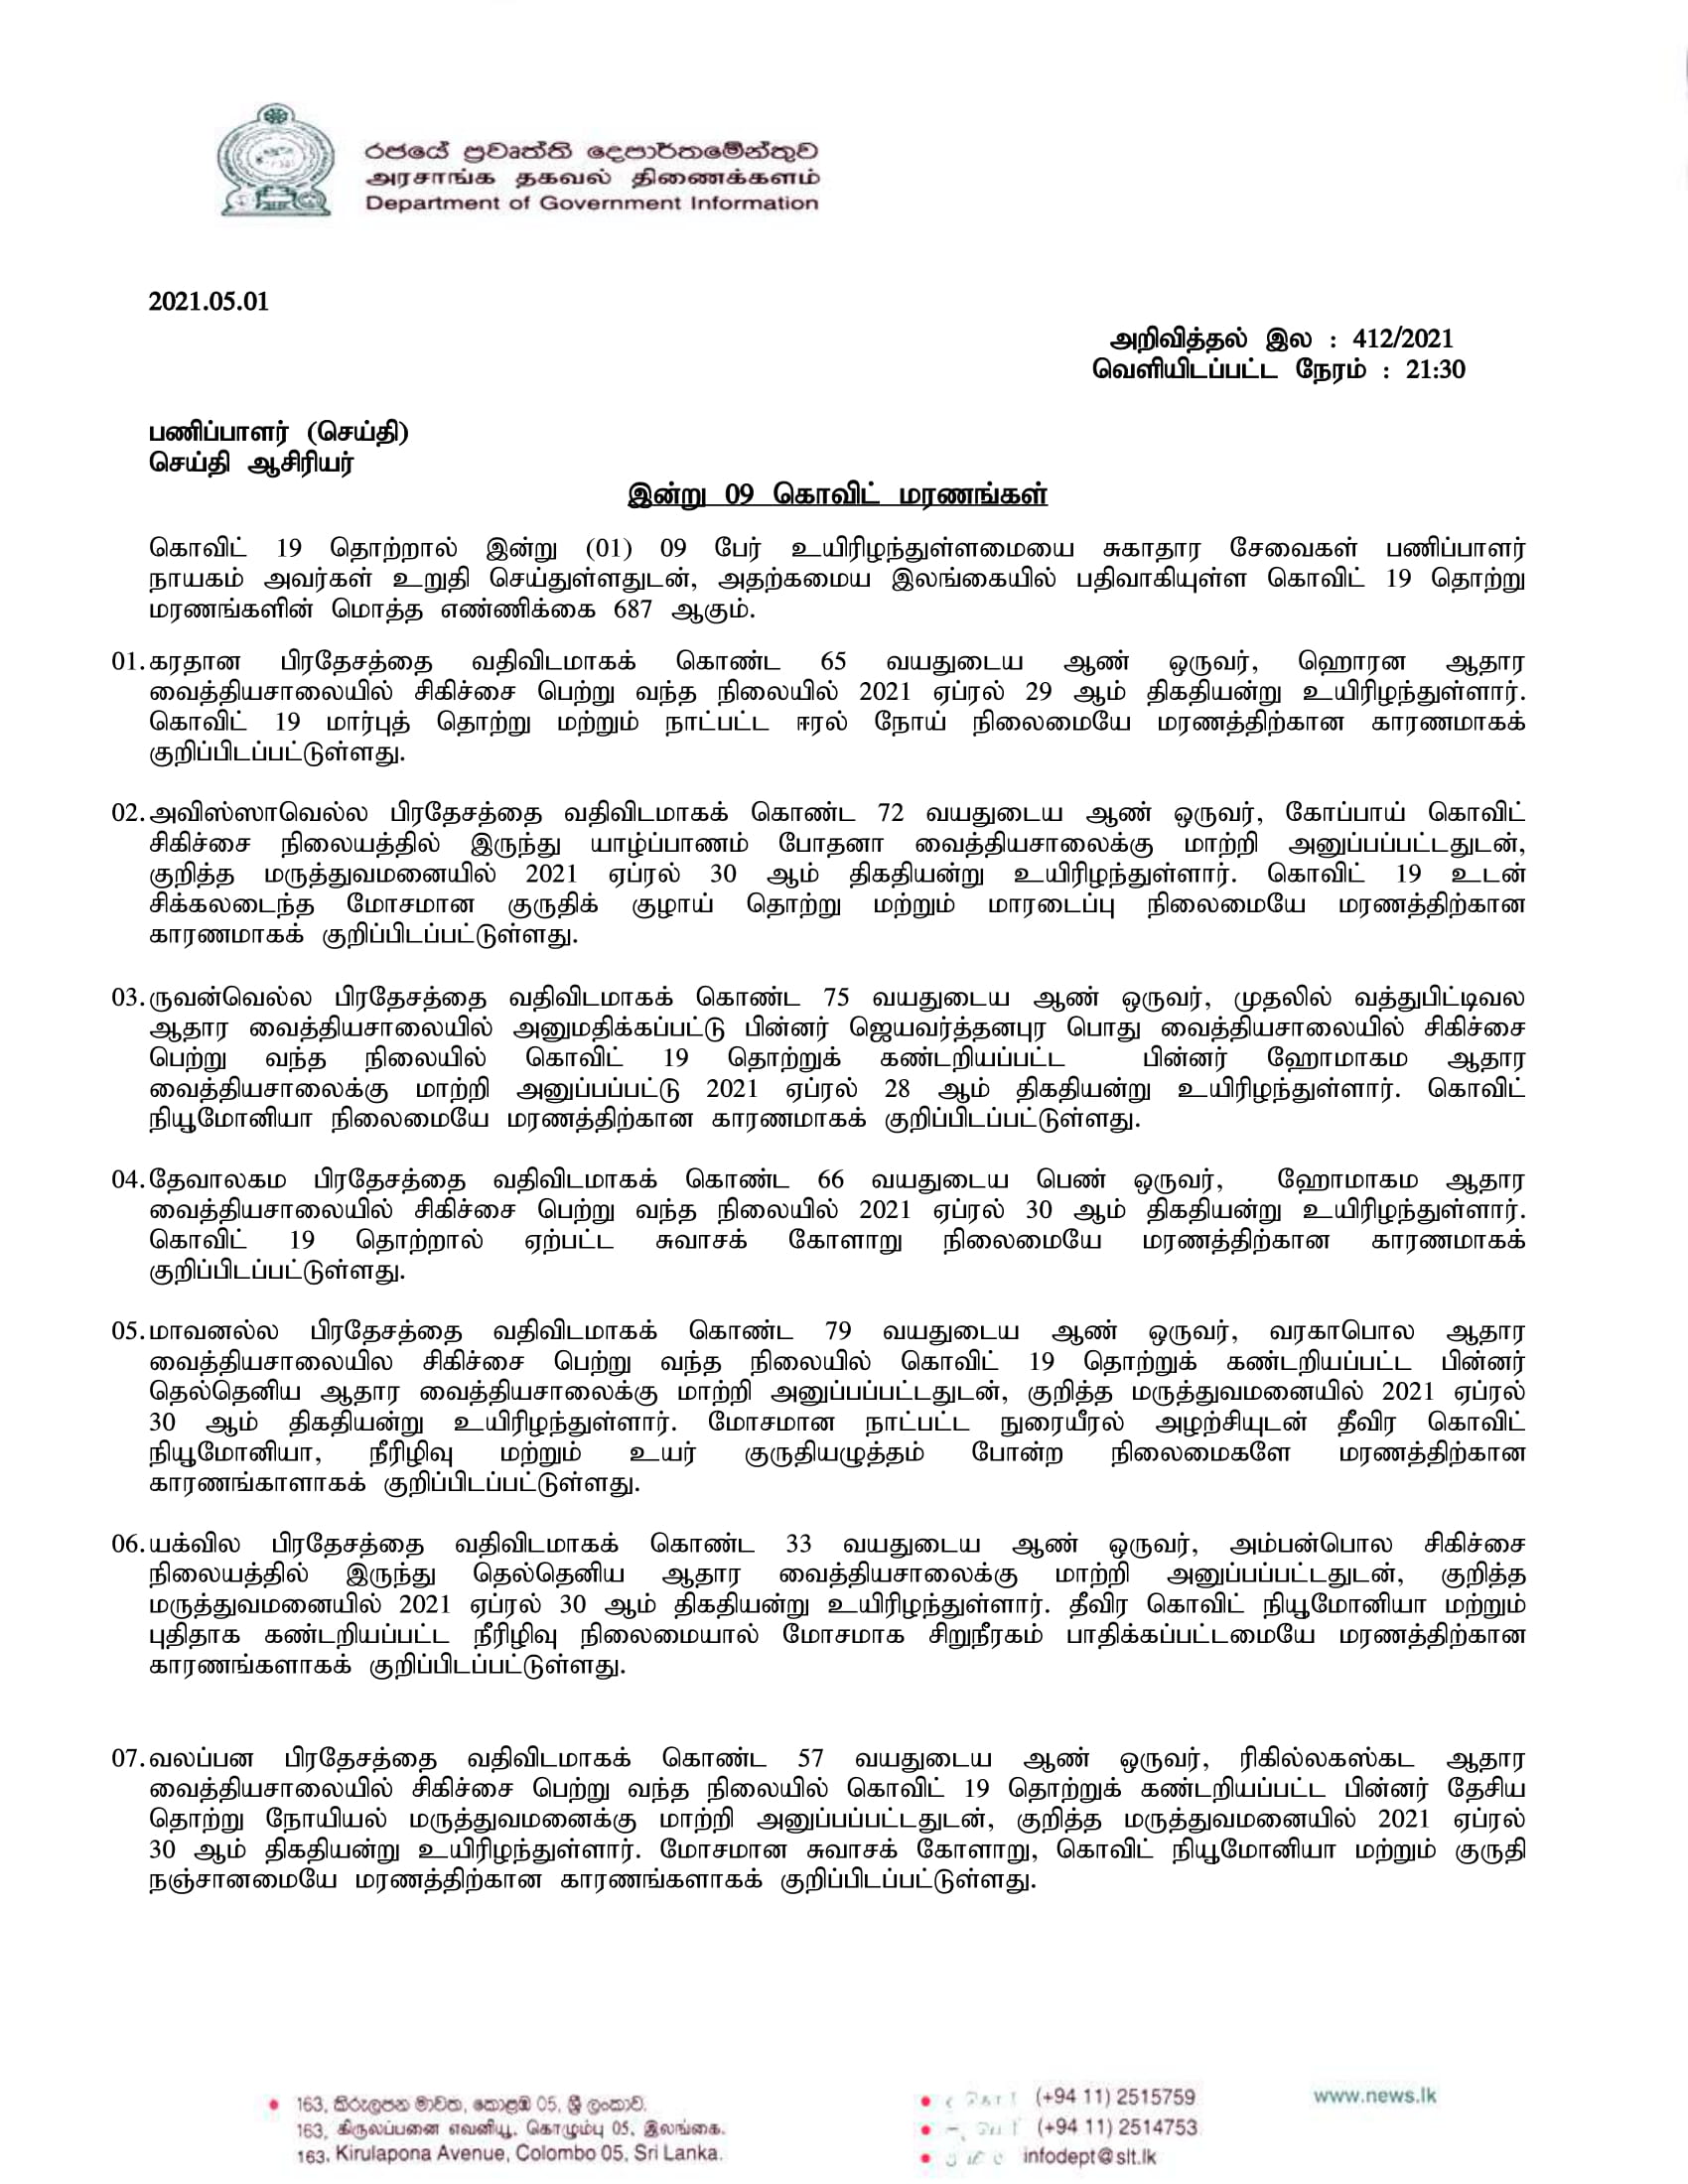 Release No 412 Tamil 1